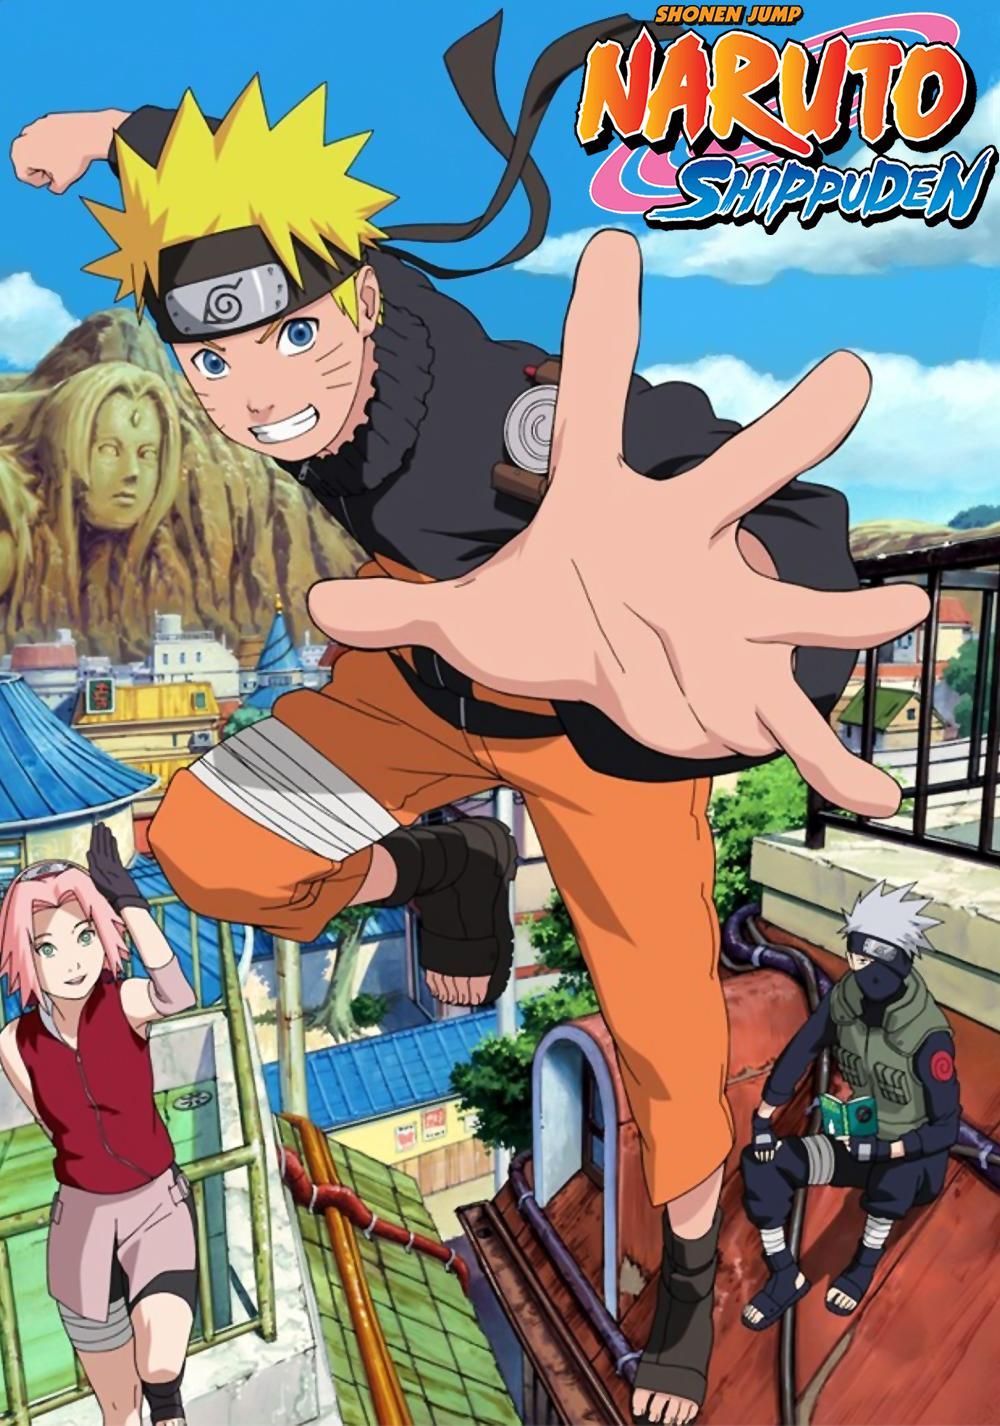 Naruto Anime Getting Four New Episodes to Celebrate 20th Anniversary